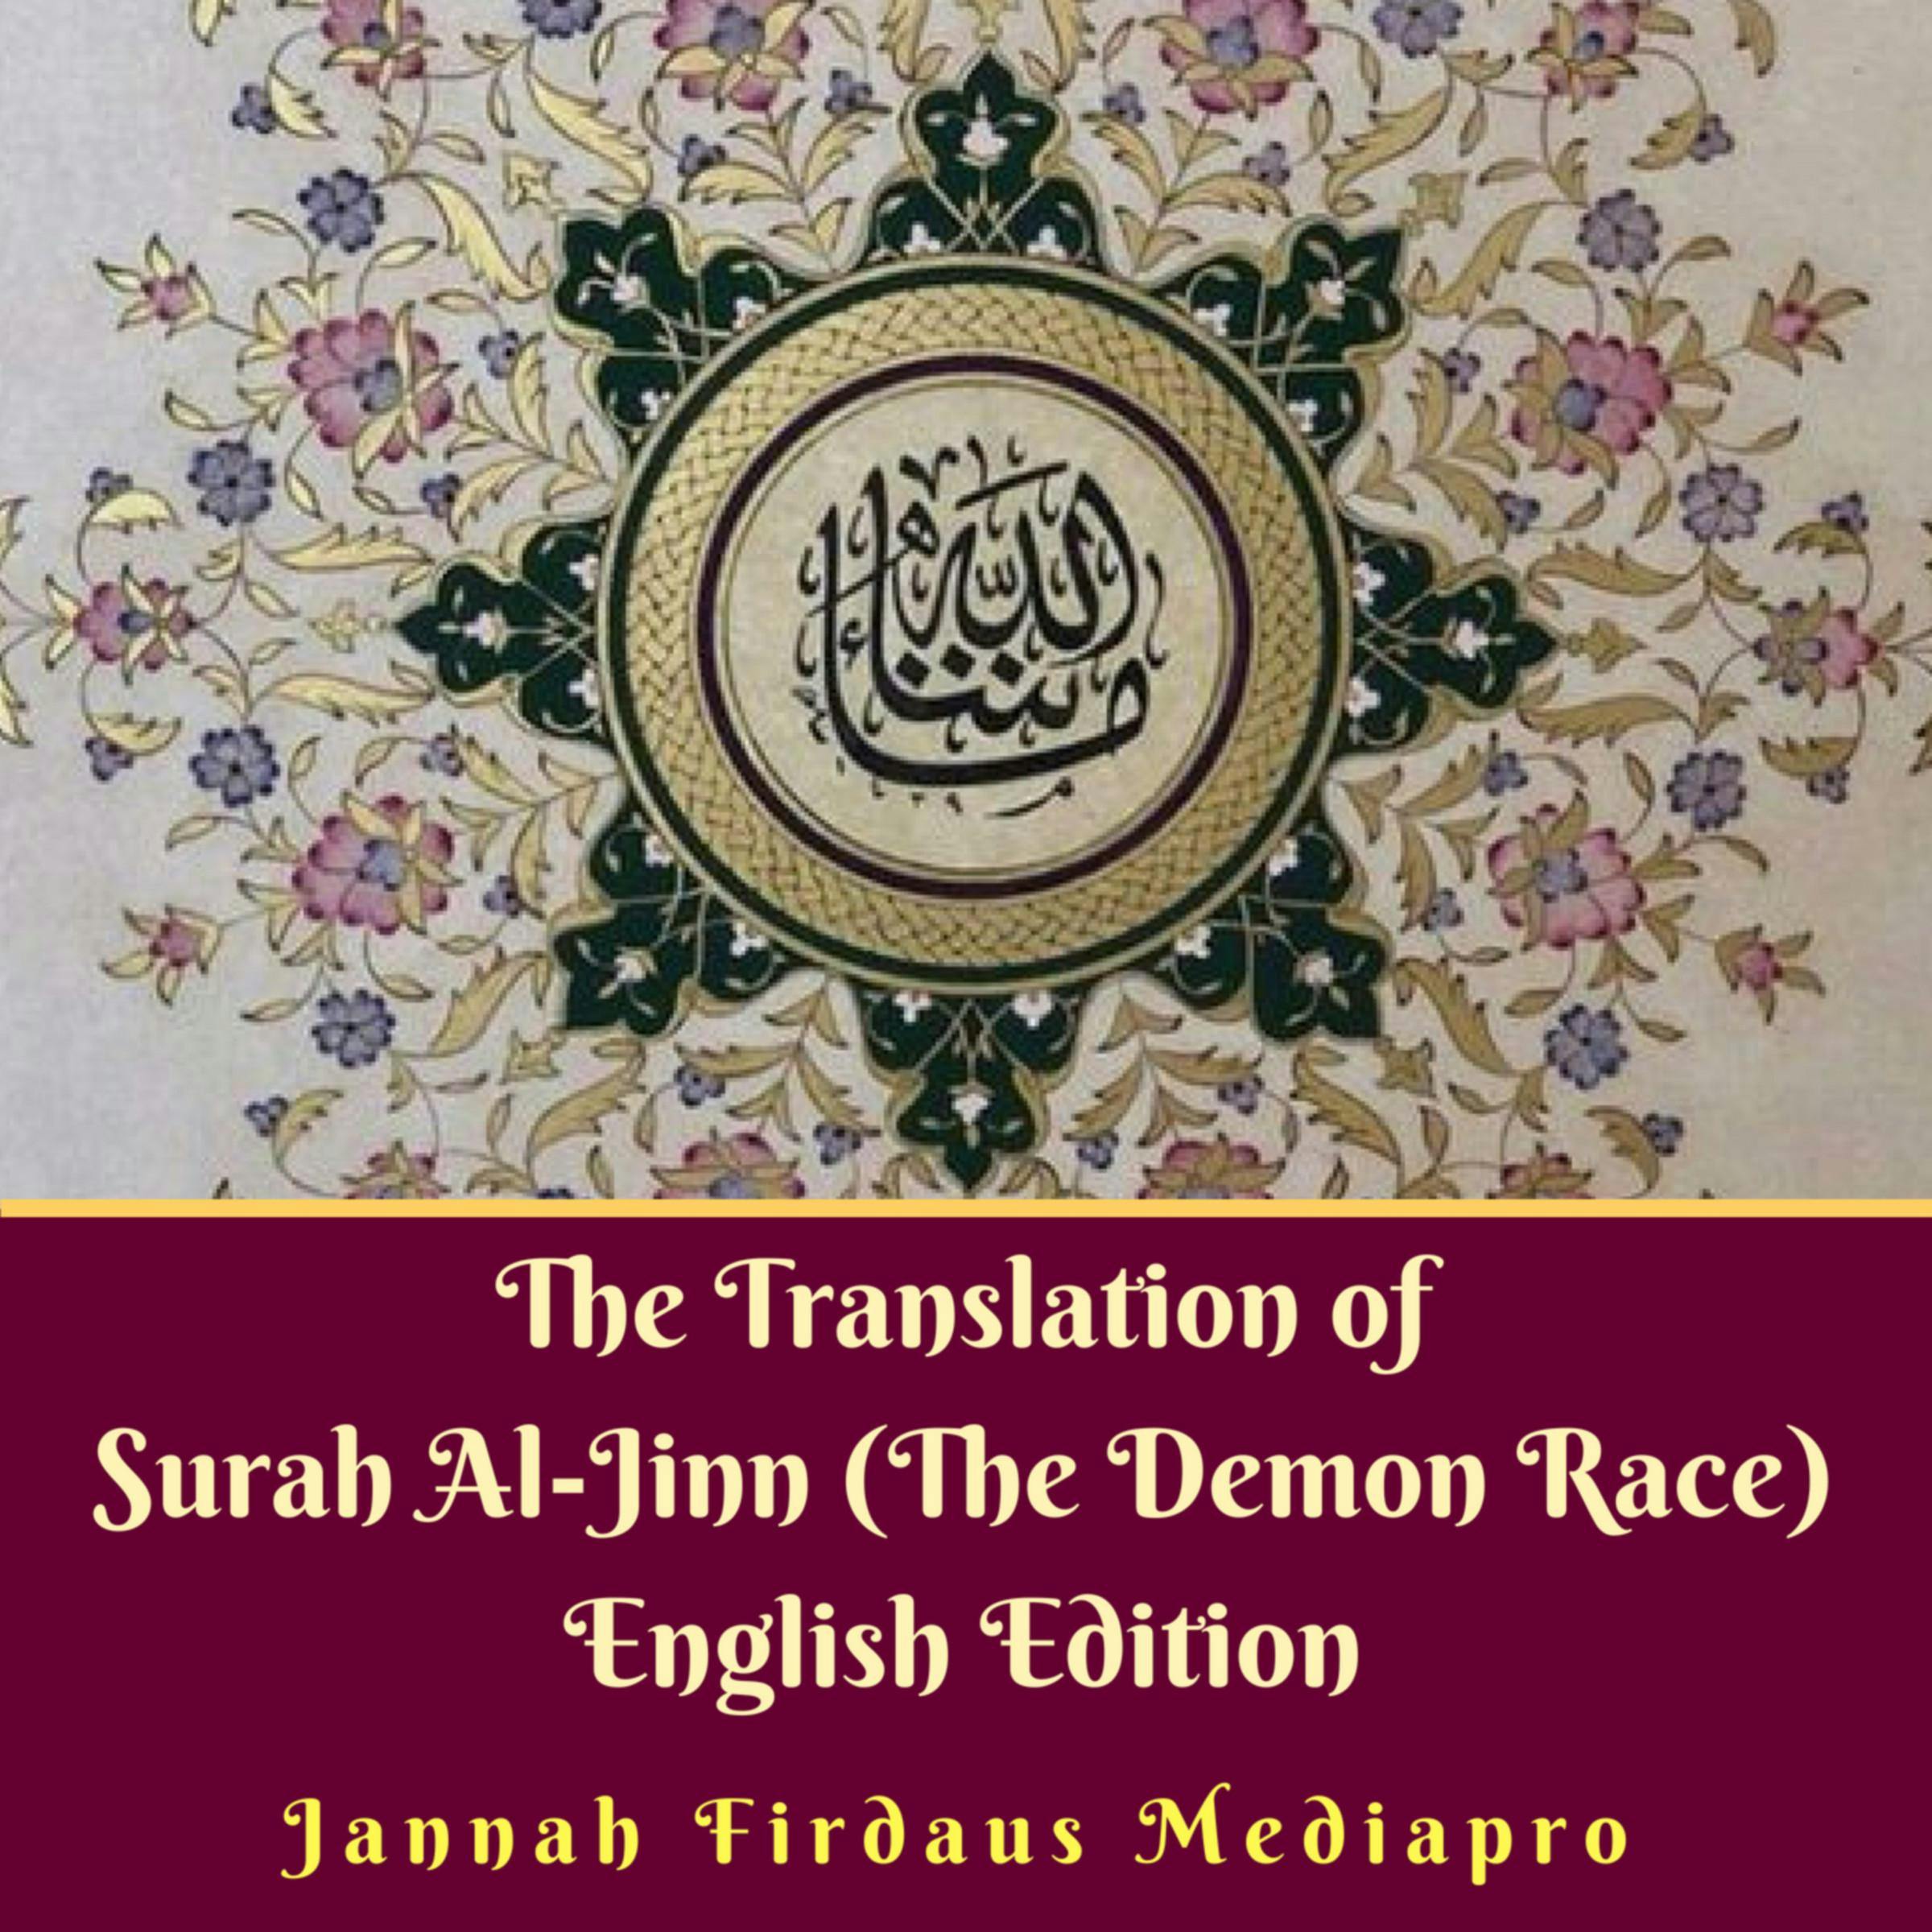 The Translation of Surah Al-Jinn (The Demon Race): English Edition - Jannah Firdaus Mediapro